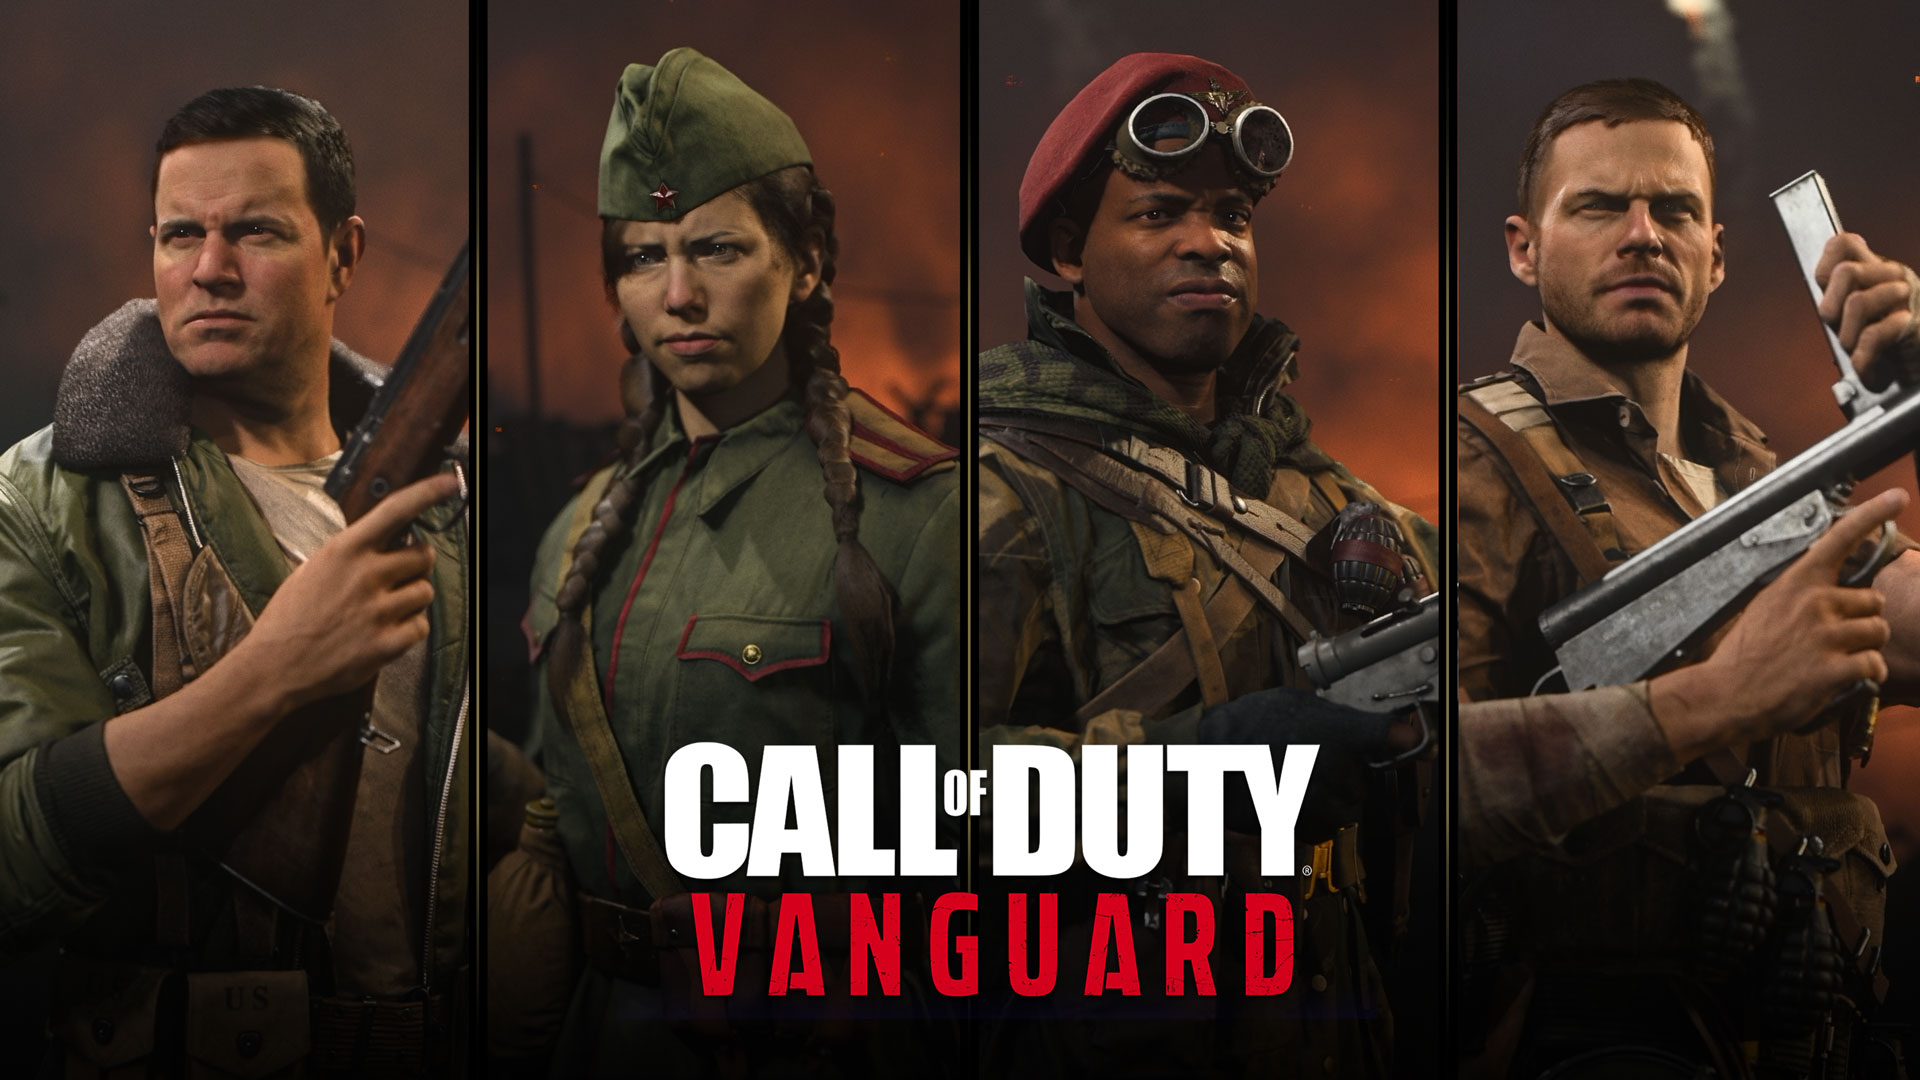 Meet the Campaign Operators of Call of Duty: Vanguard